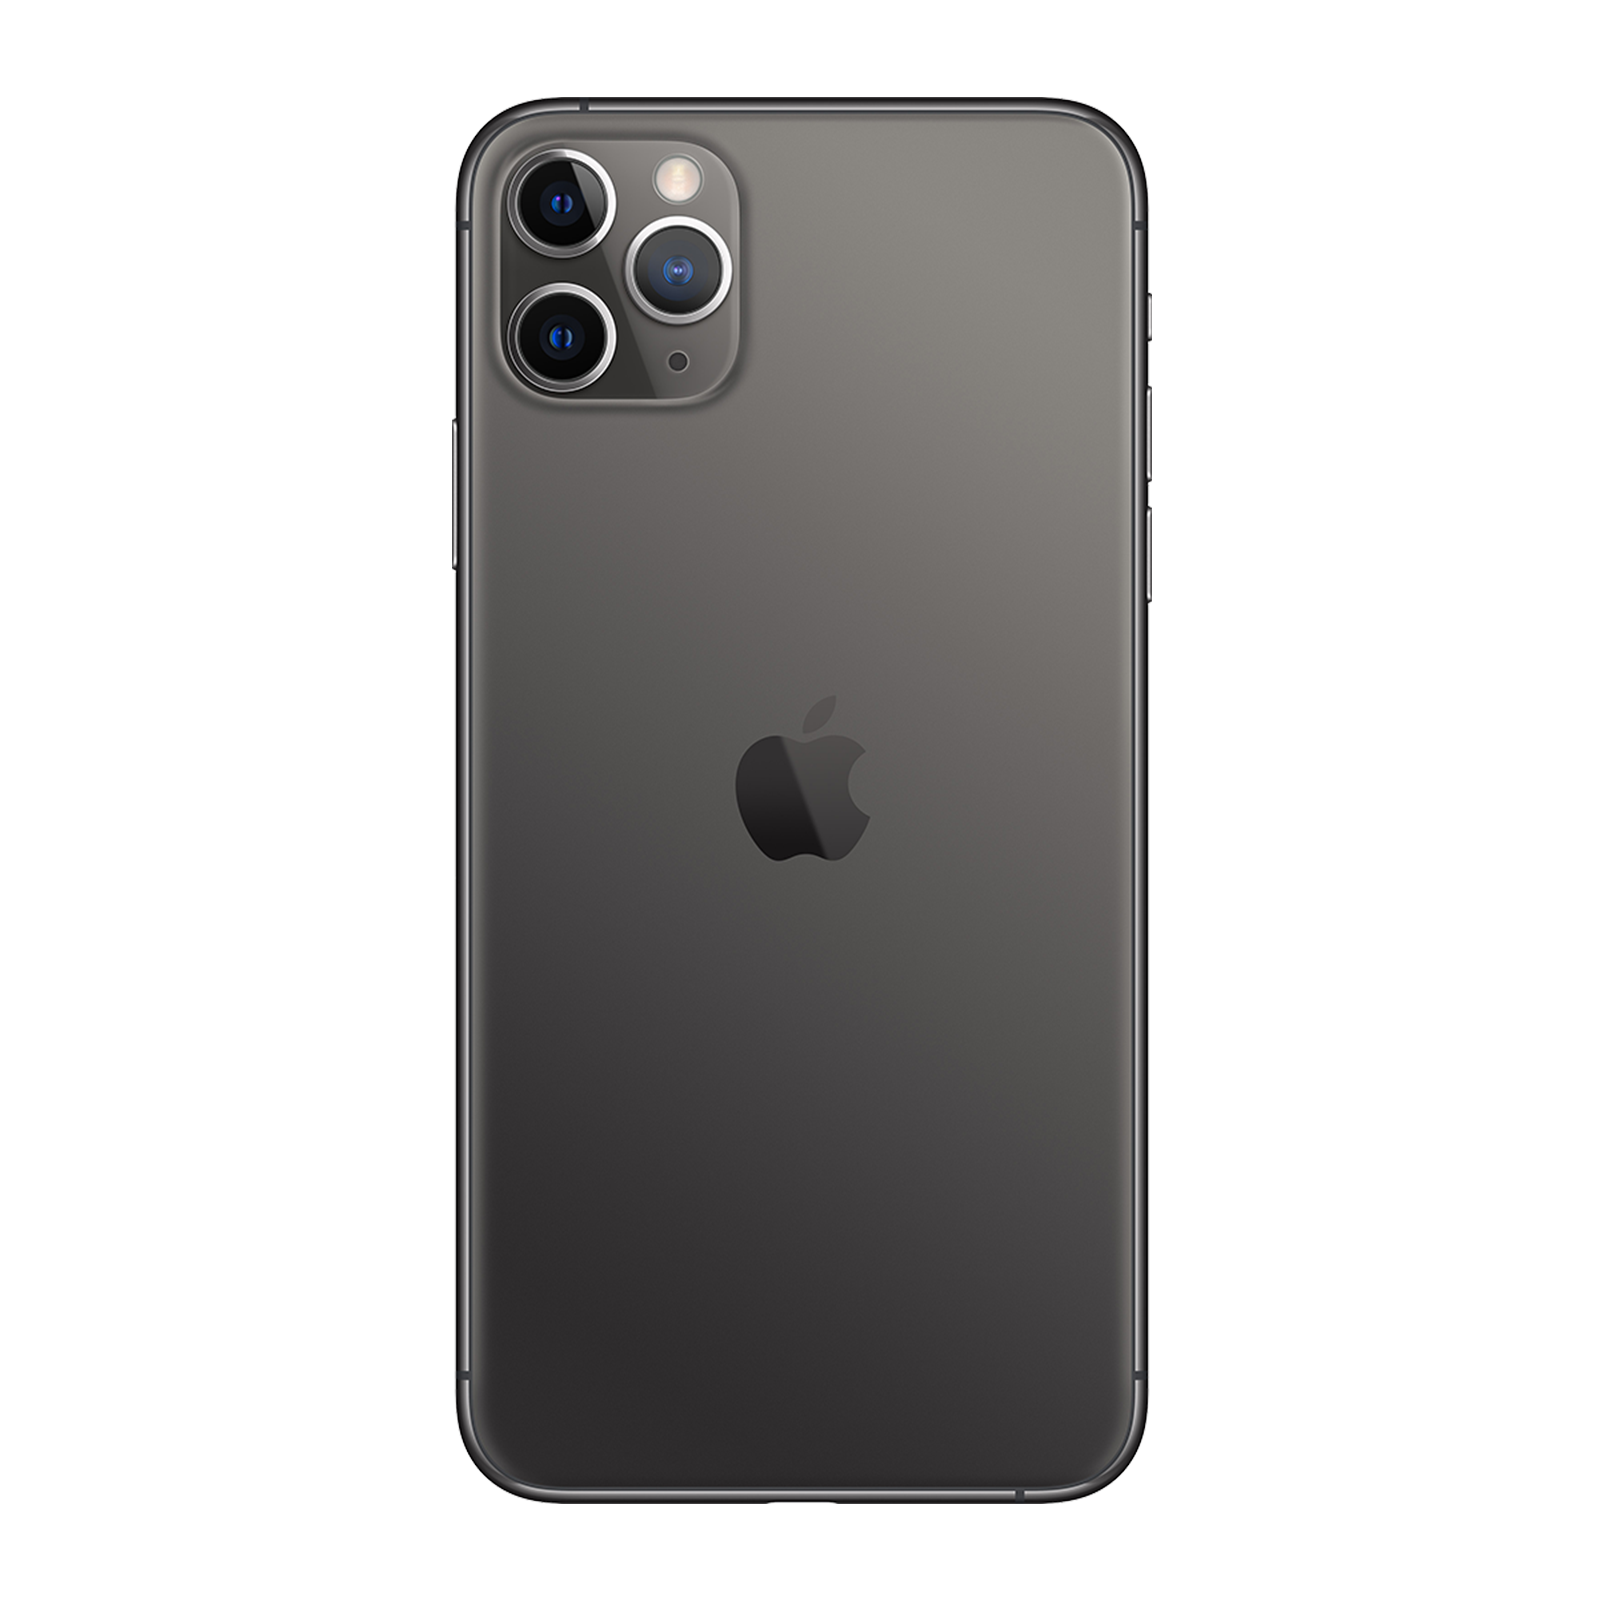 Apple iPhone 11 Pro Max 64GB Space Grey Very Good - Unlocked